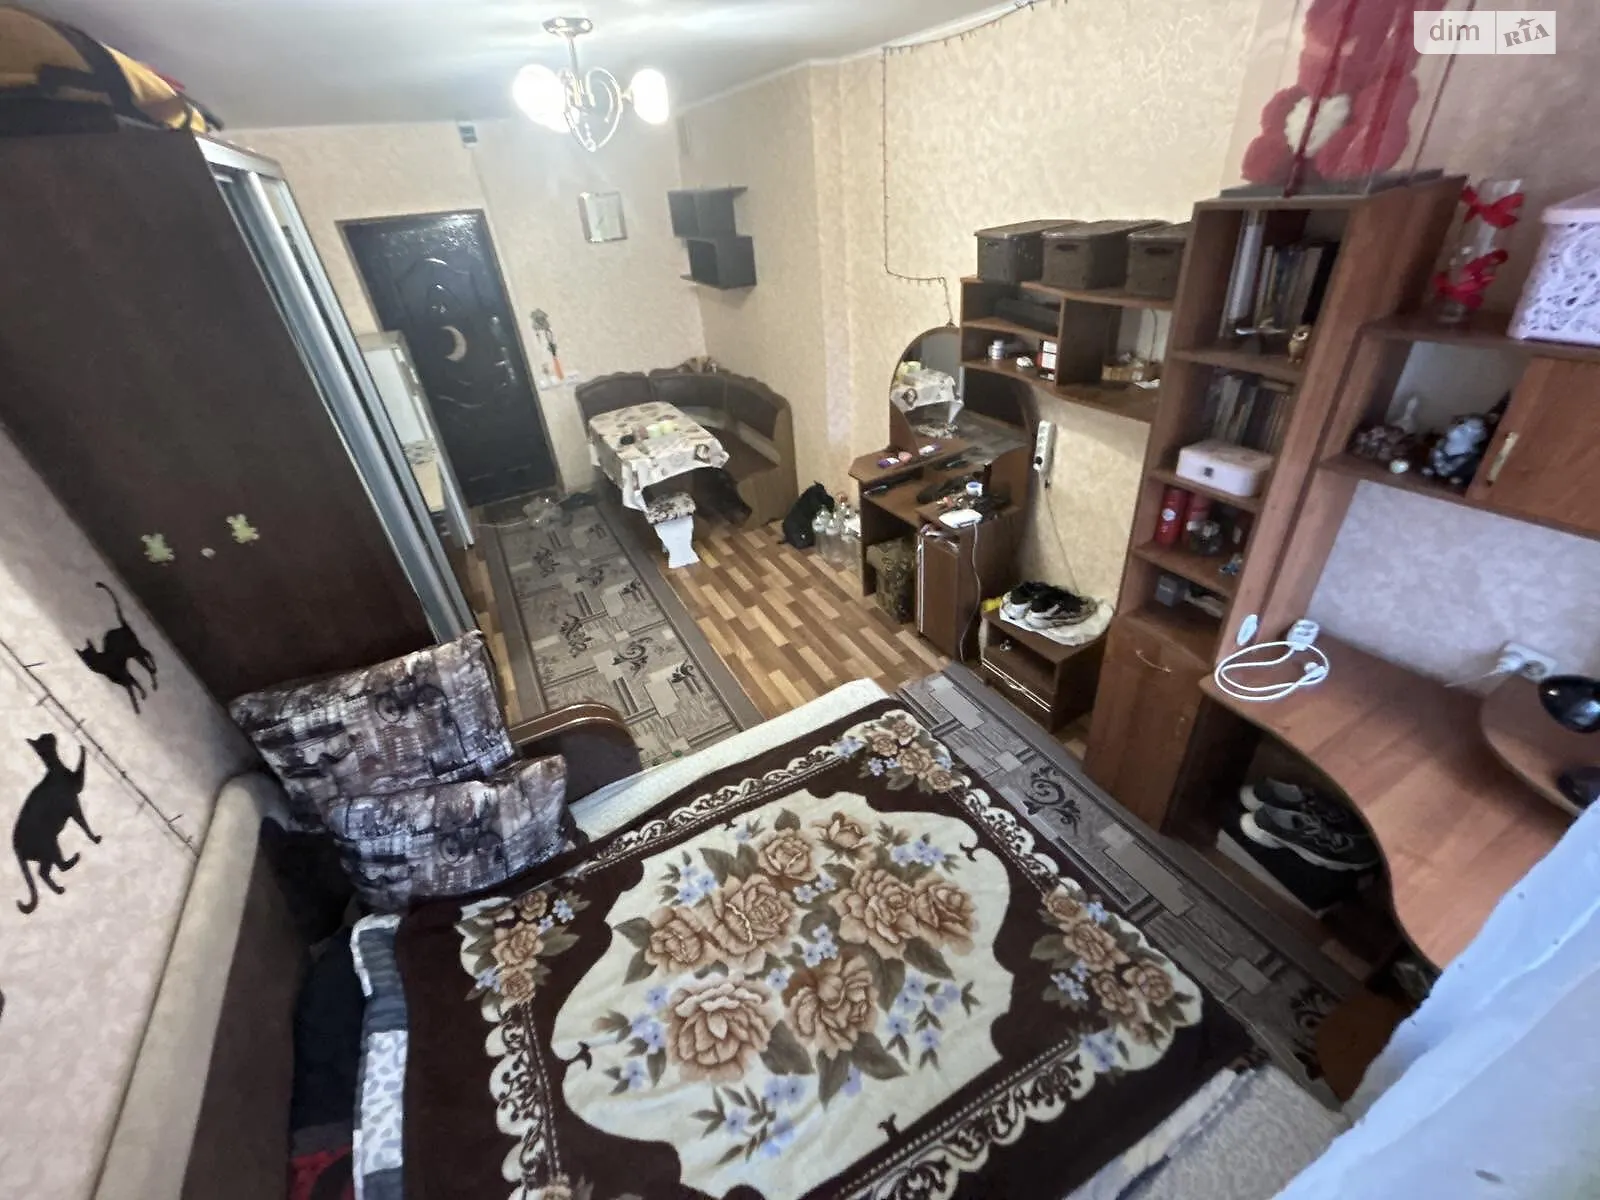 Продается комната 16.3 кв. м в Николаеве - фото 3